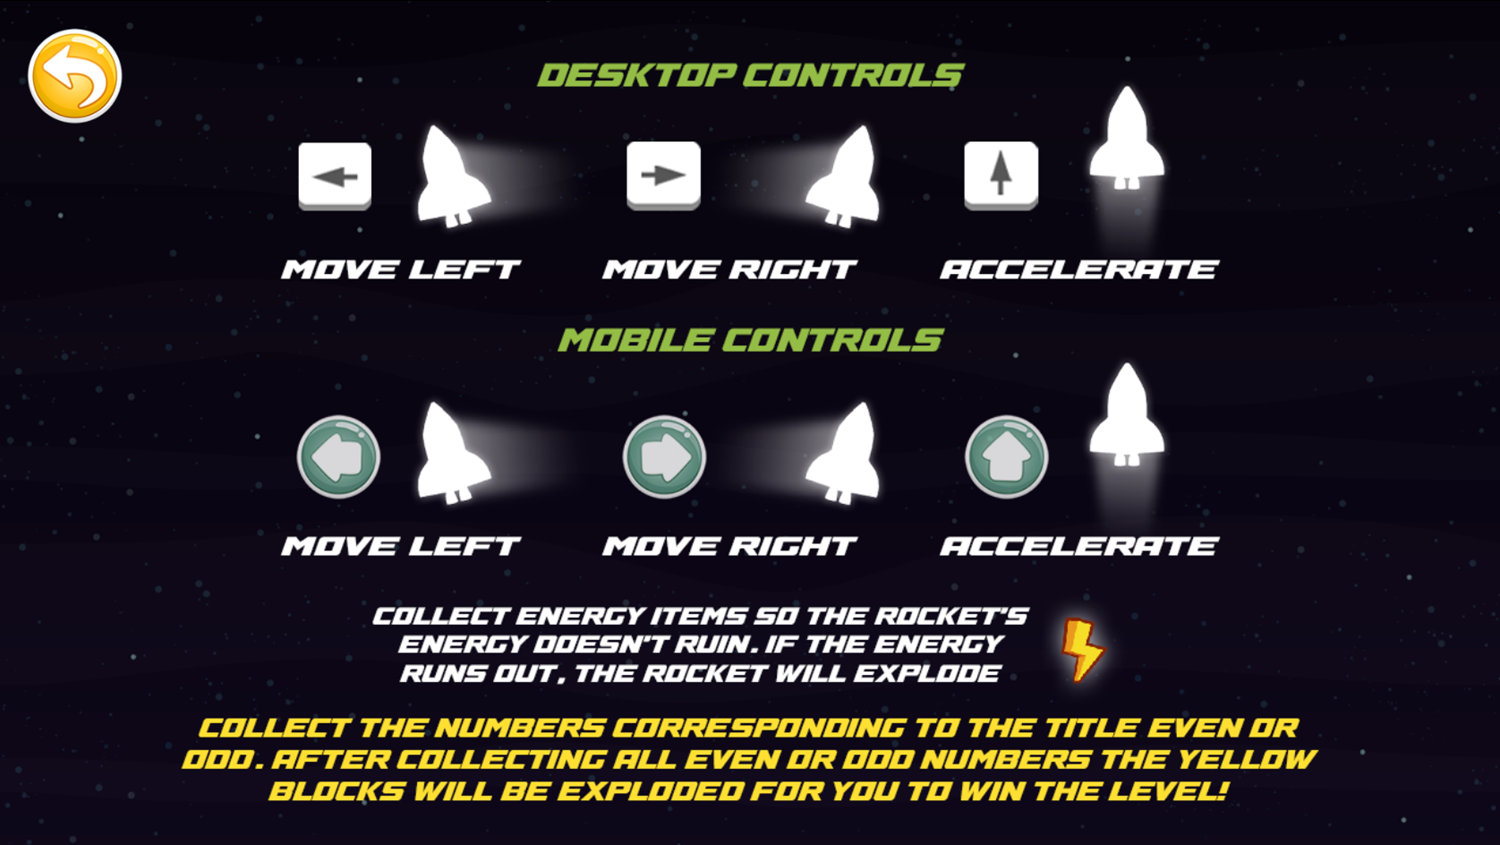 Rocket Balance Even Odd Game Controls Screenshot.